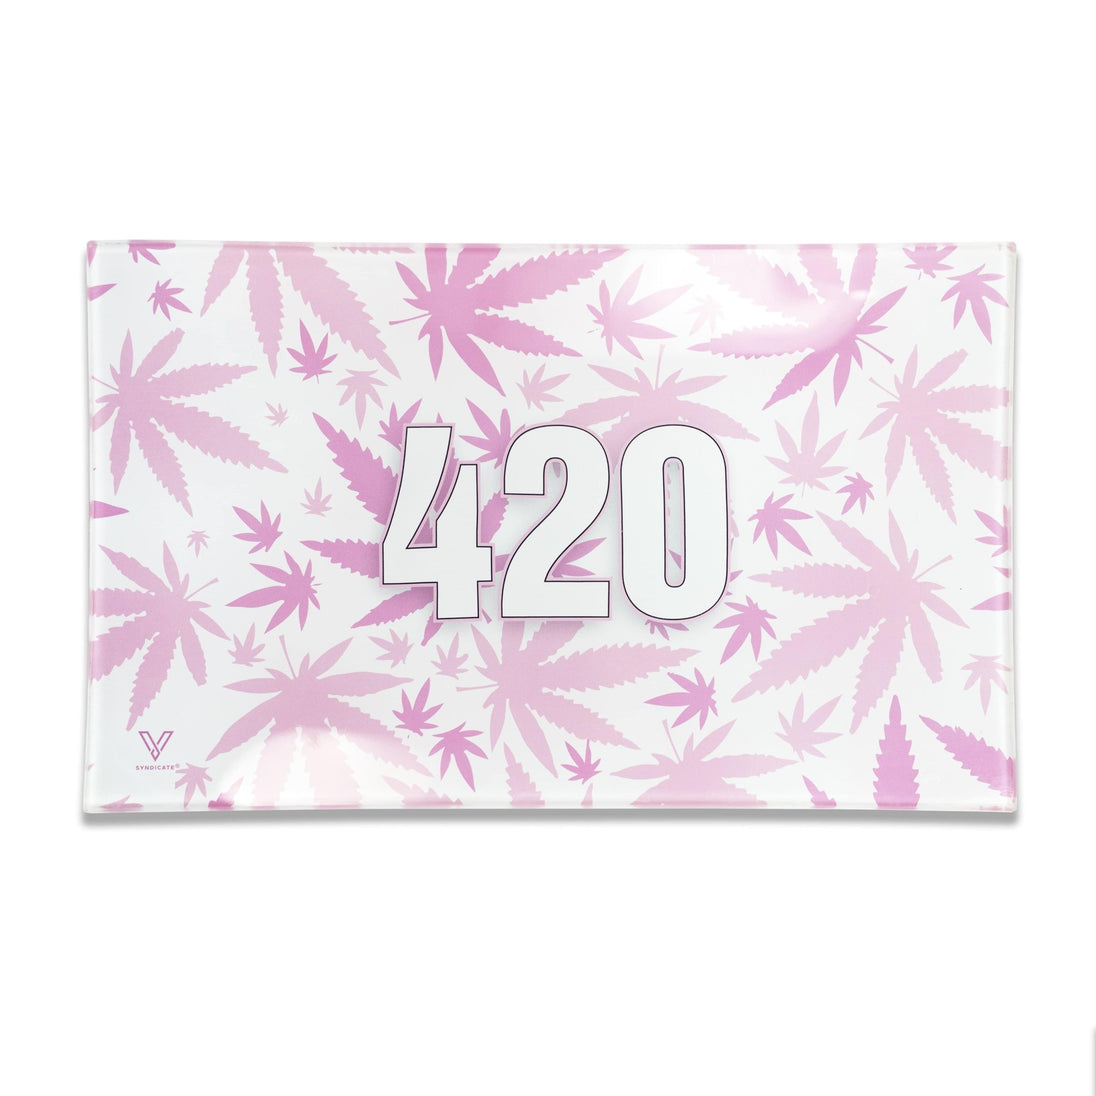 V Syndicate 420 Pink Glass Rollin' Tray - Glasss Station